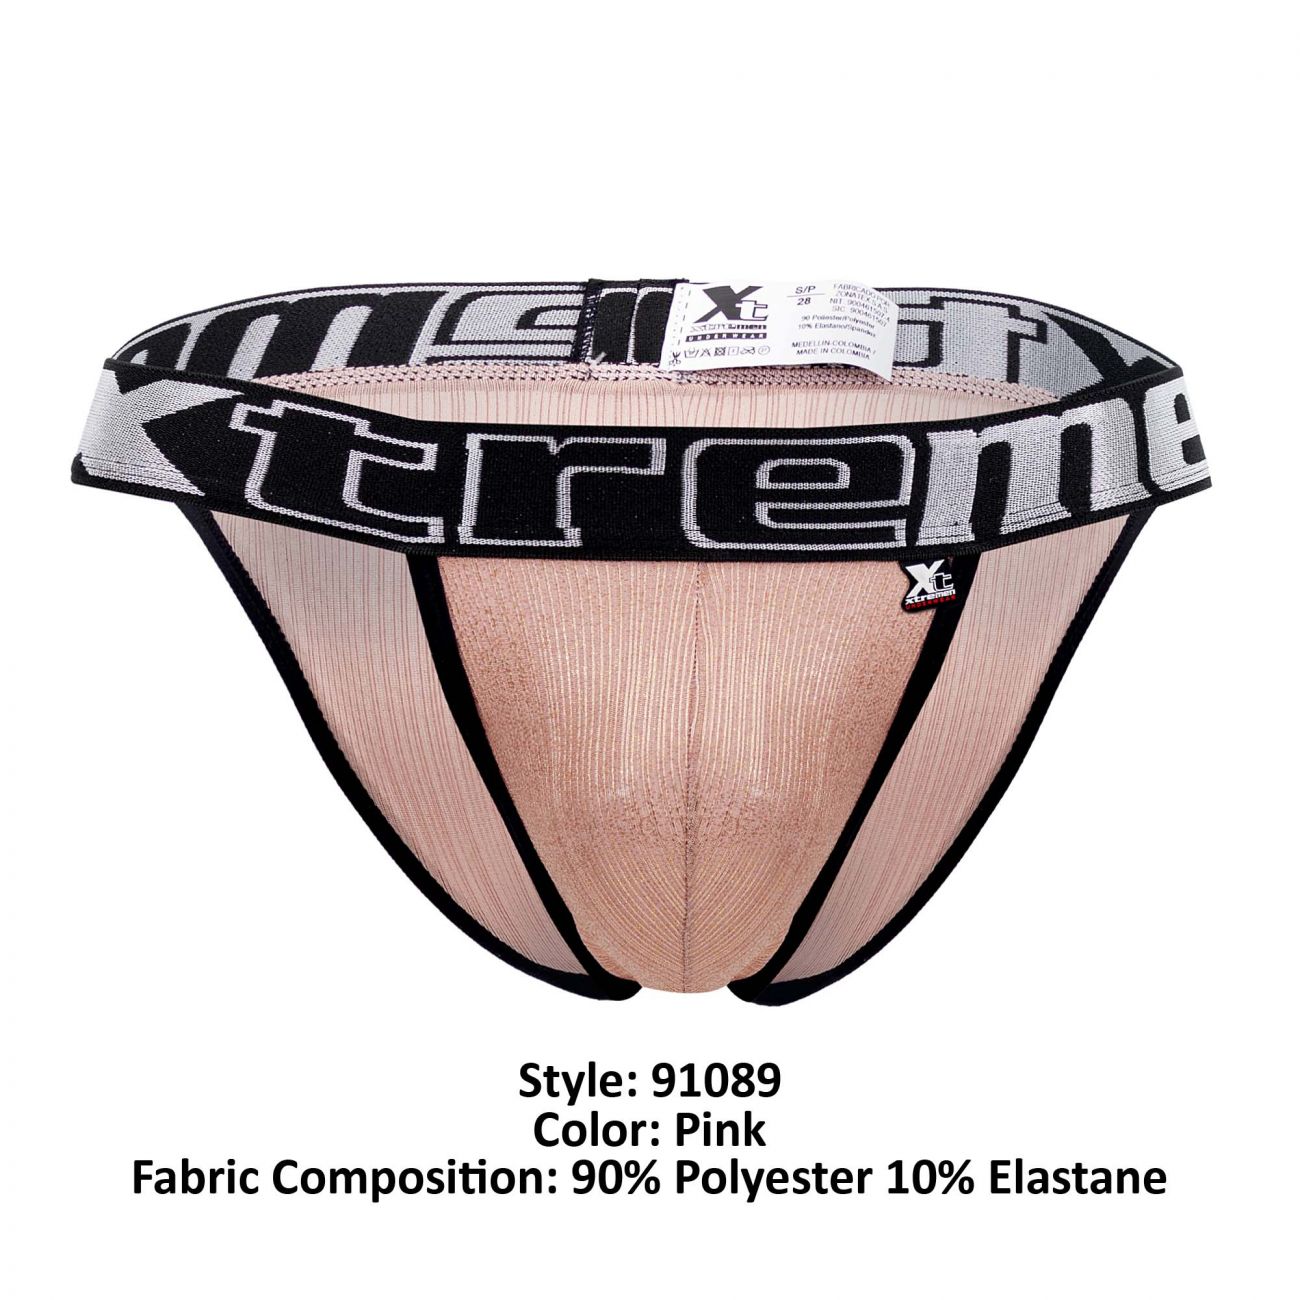 Xtremen 91089 Frice Microfiber Bikini Pink